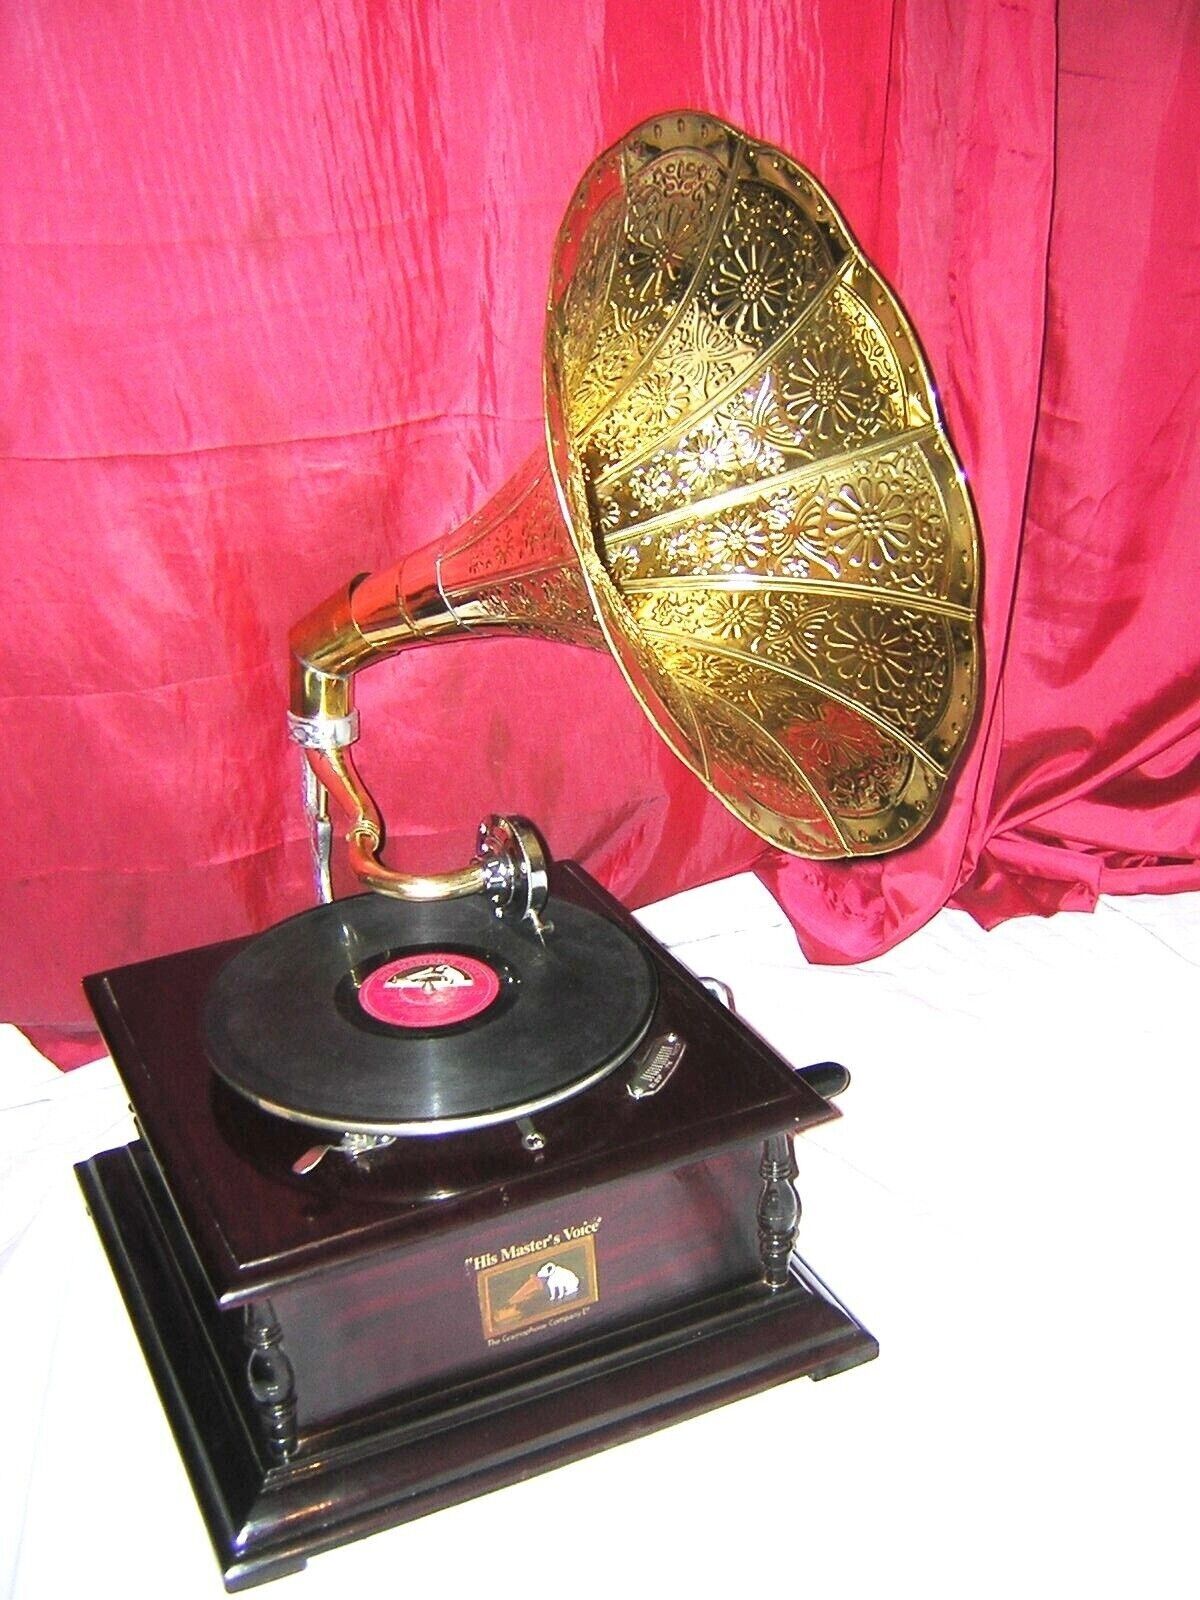 Vintage Gramophone phonograph sound box with needles girlfriends boyfriend gift